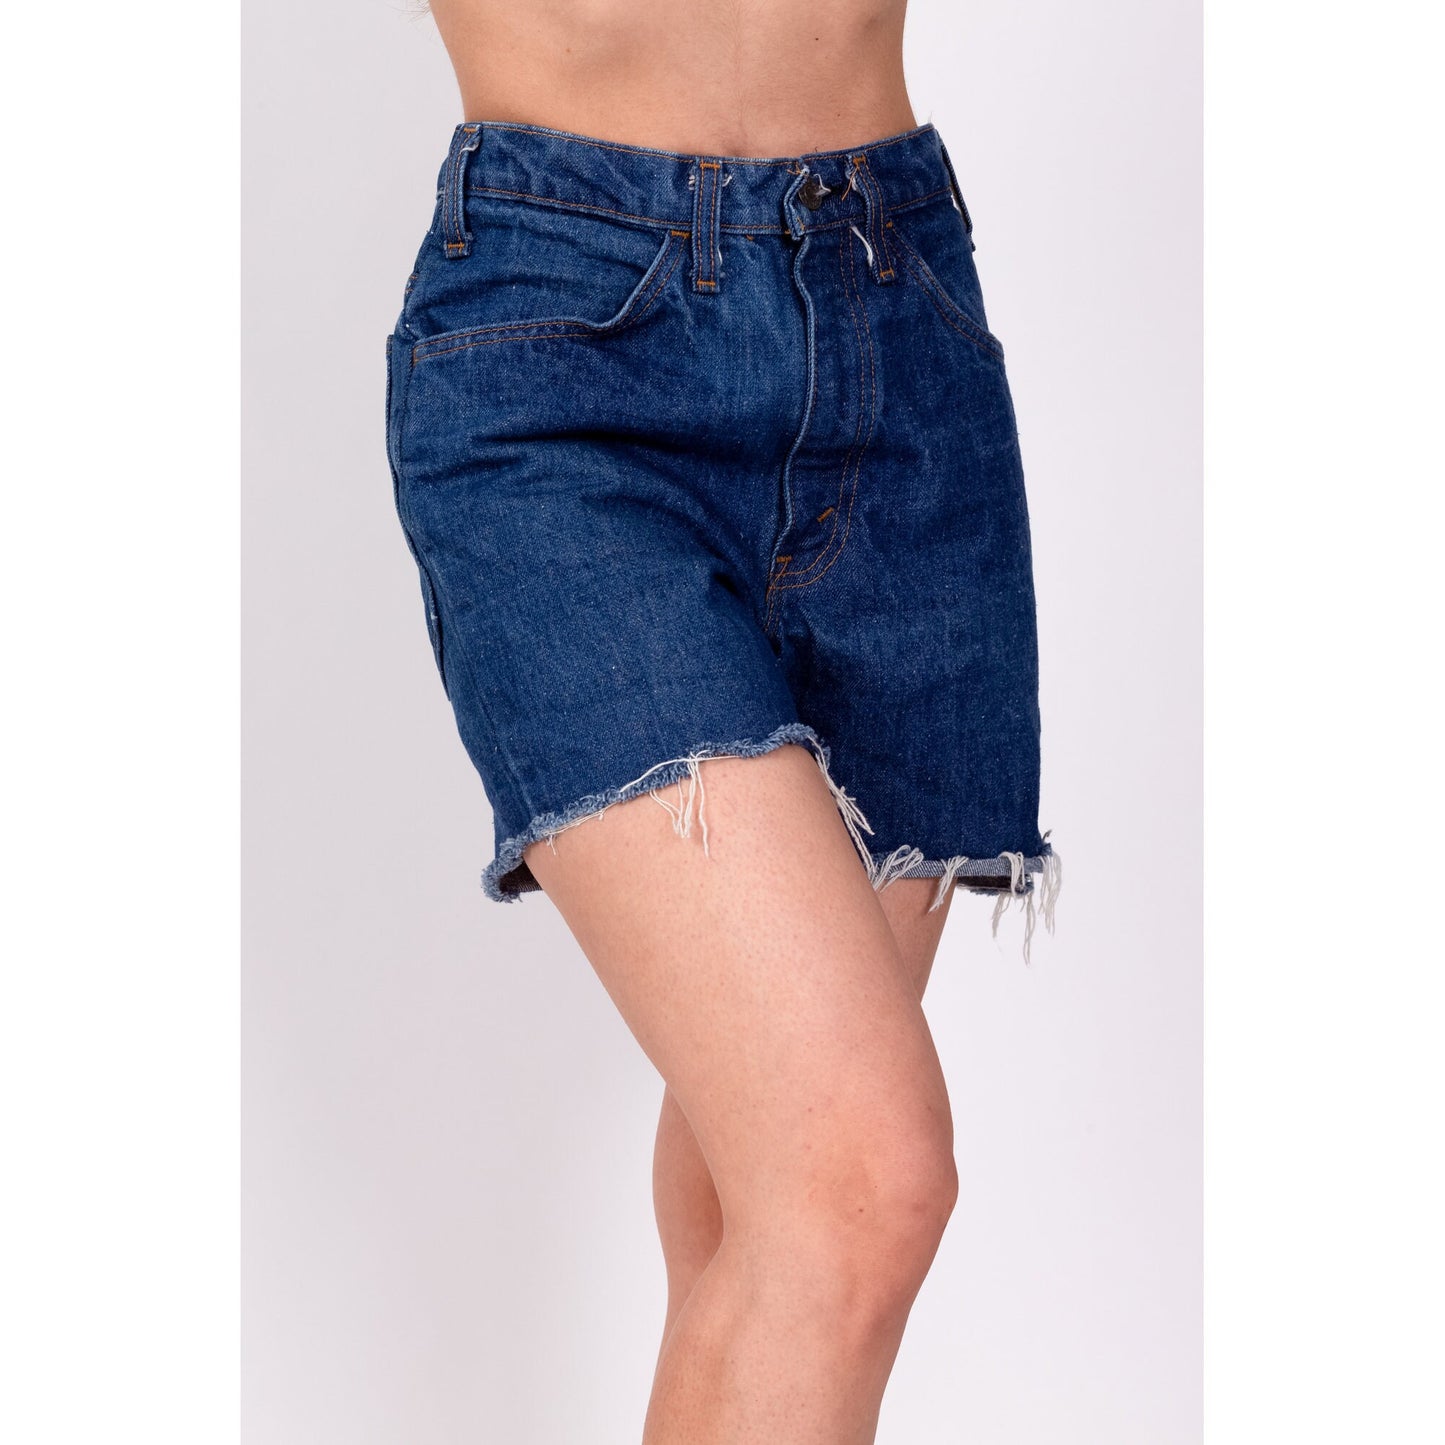 70s Cut Off Jean Shorts - Men's XS 